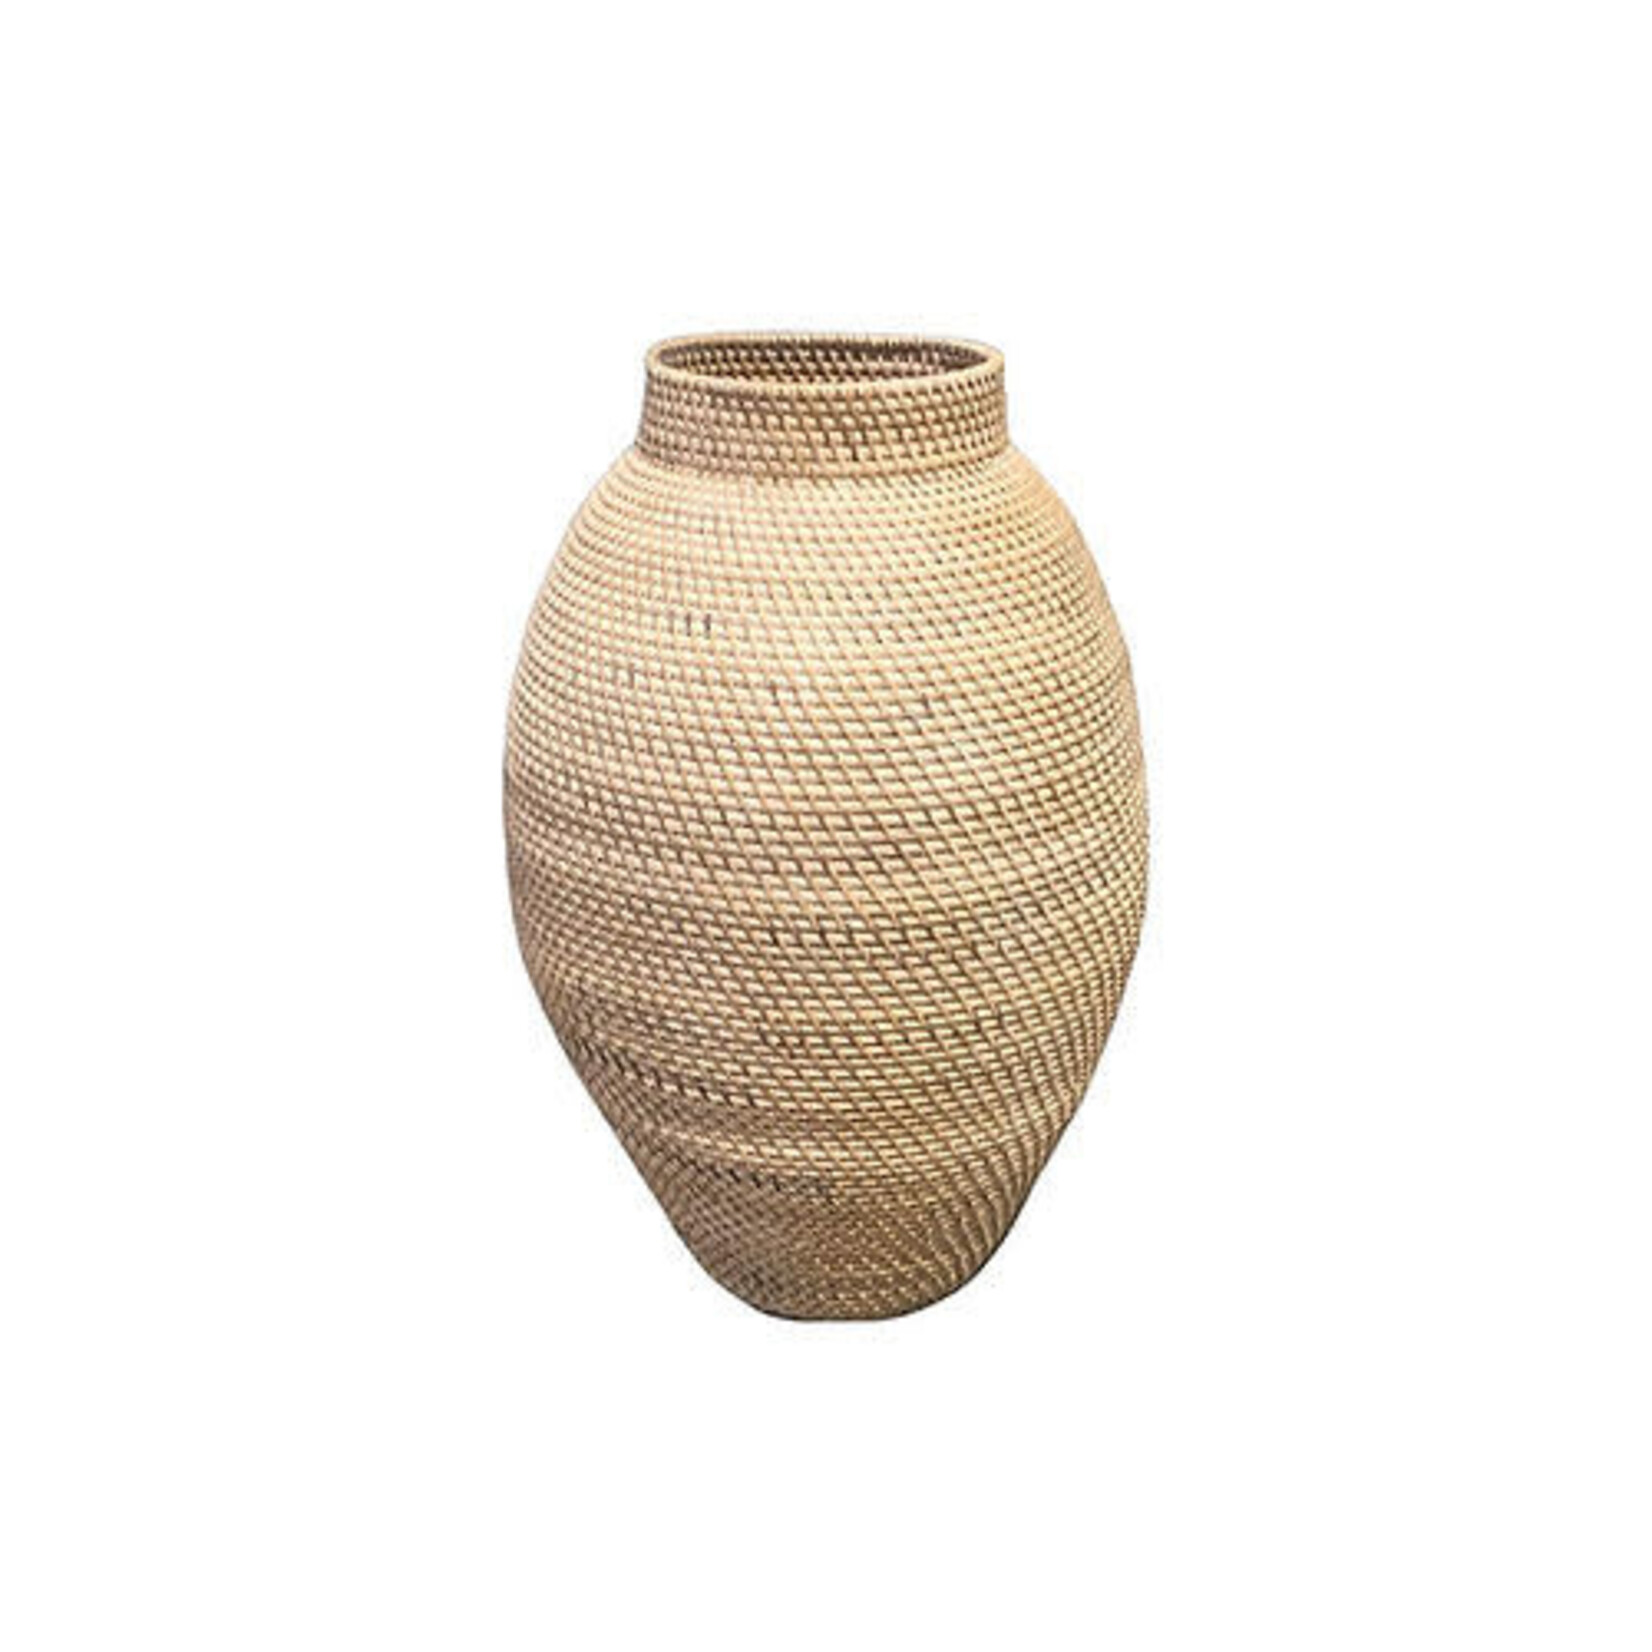 Handwoven Seagrass Vase - Medium